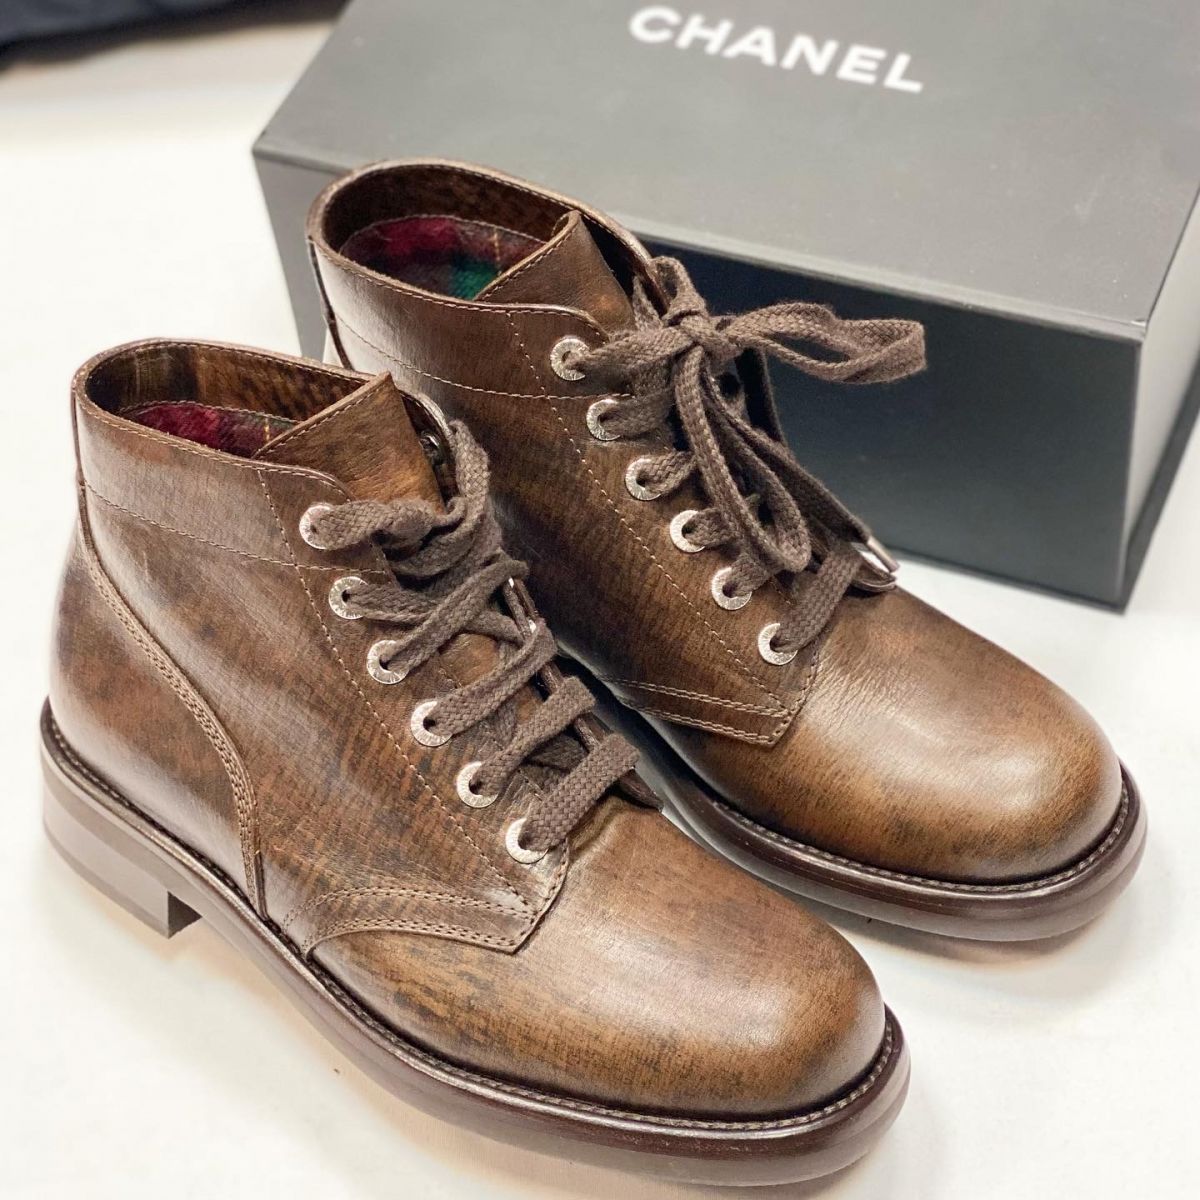 Ботинки Chanel размер 37.5 цена 21 539 руб / новые / 